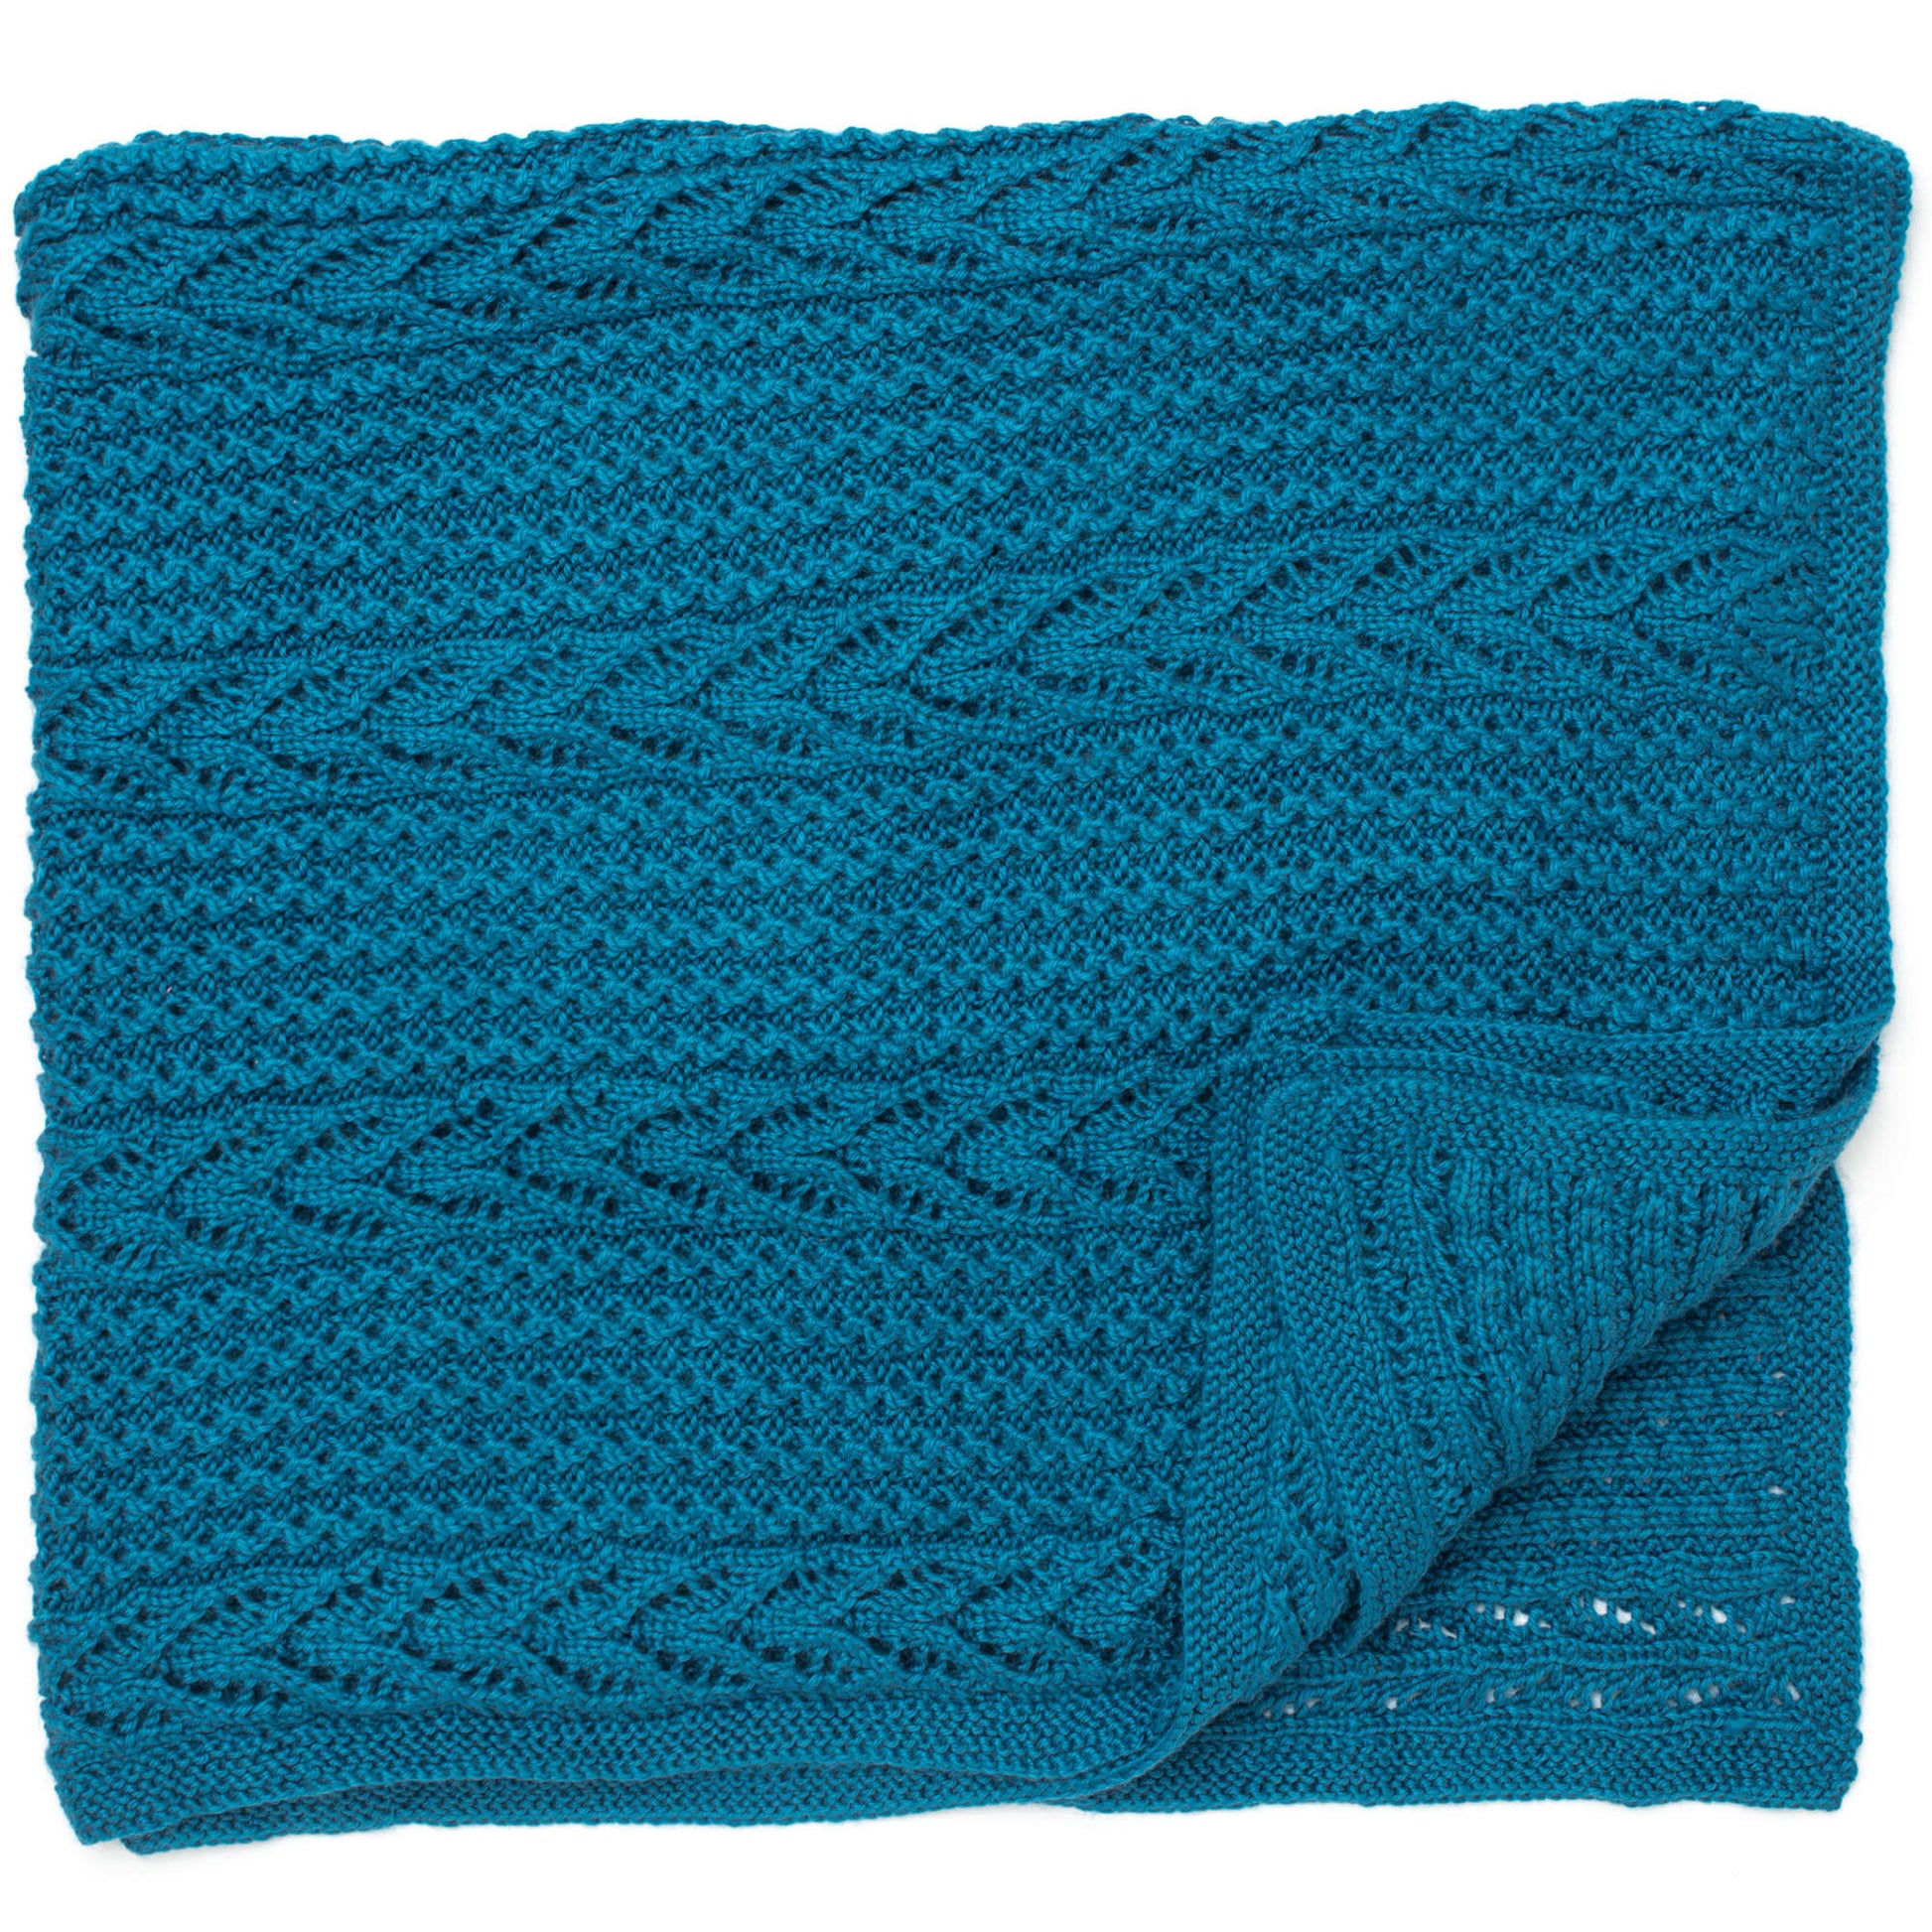 Free Bernat Lacy Throw Knit Pattern